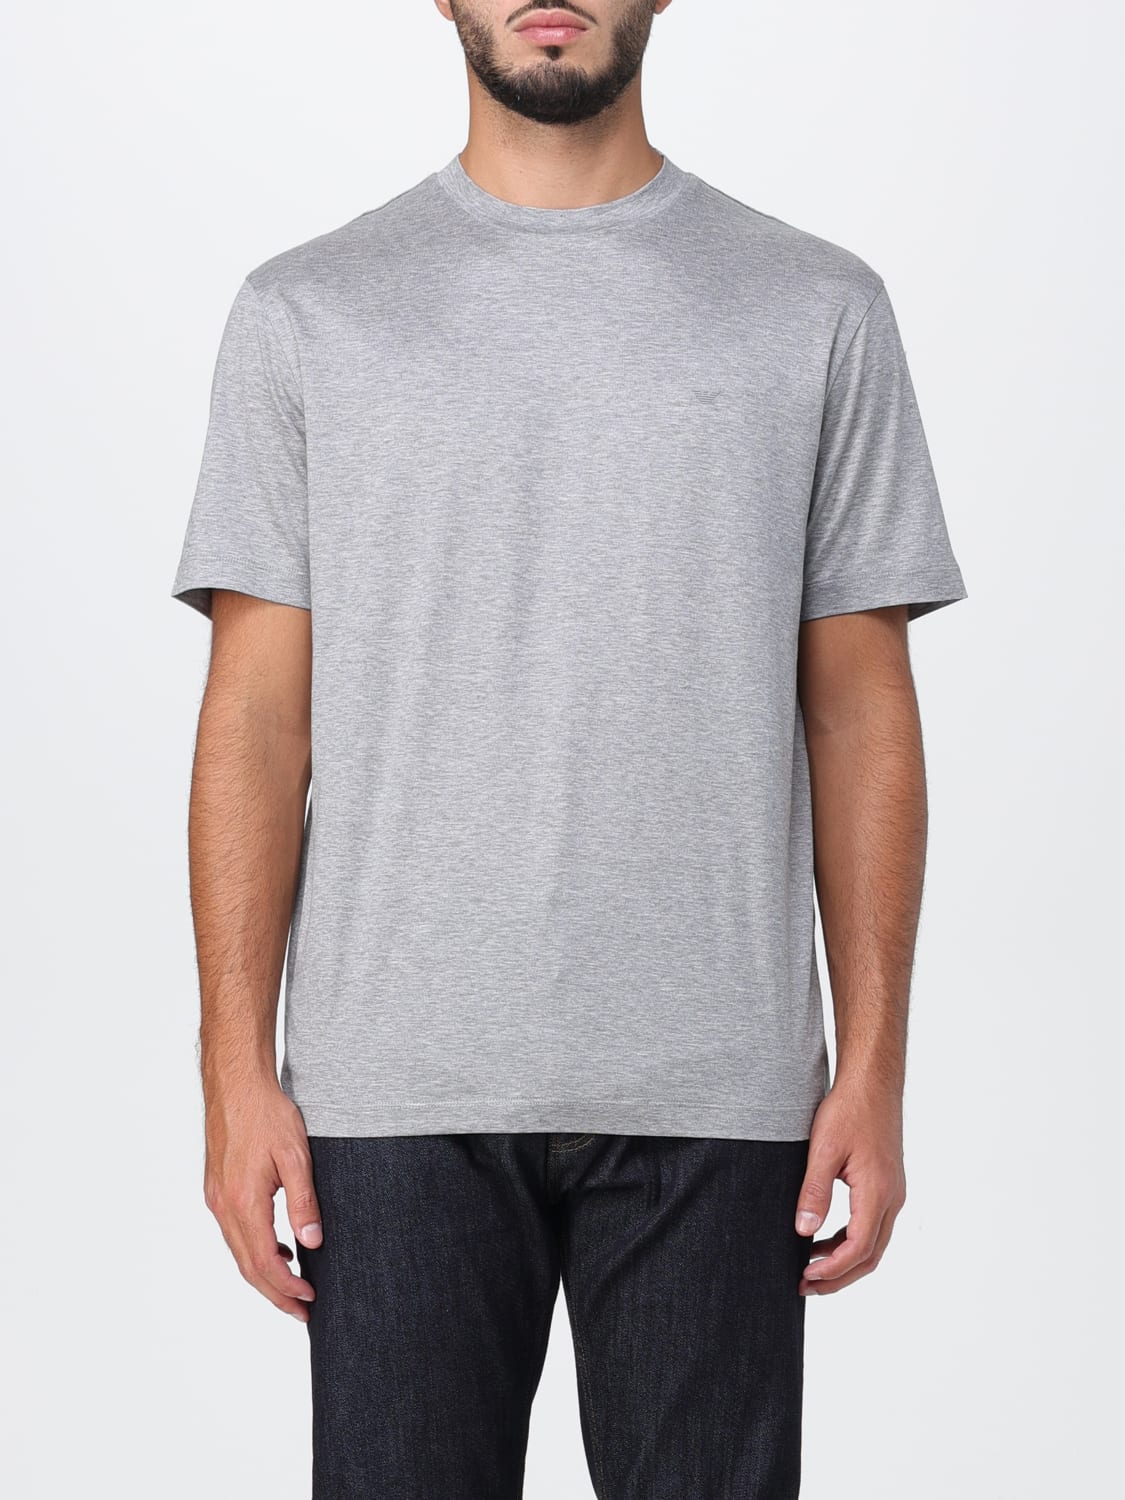 Giorgio Armani Symbol Men'S T Shirt